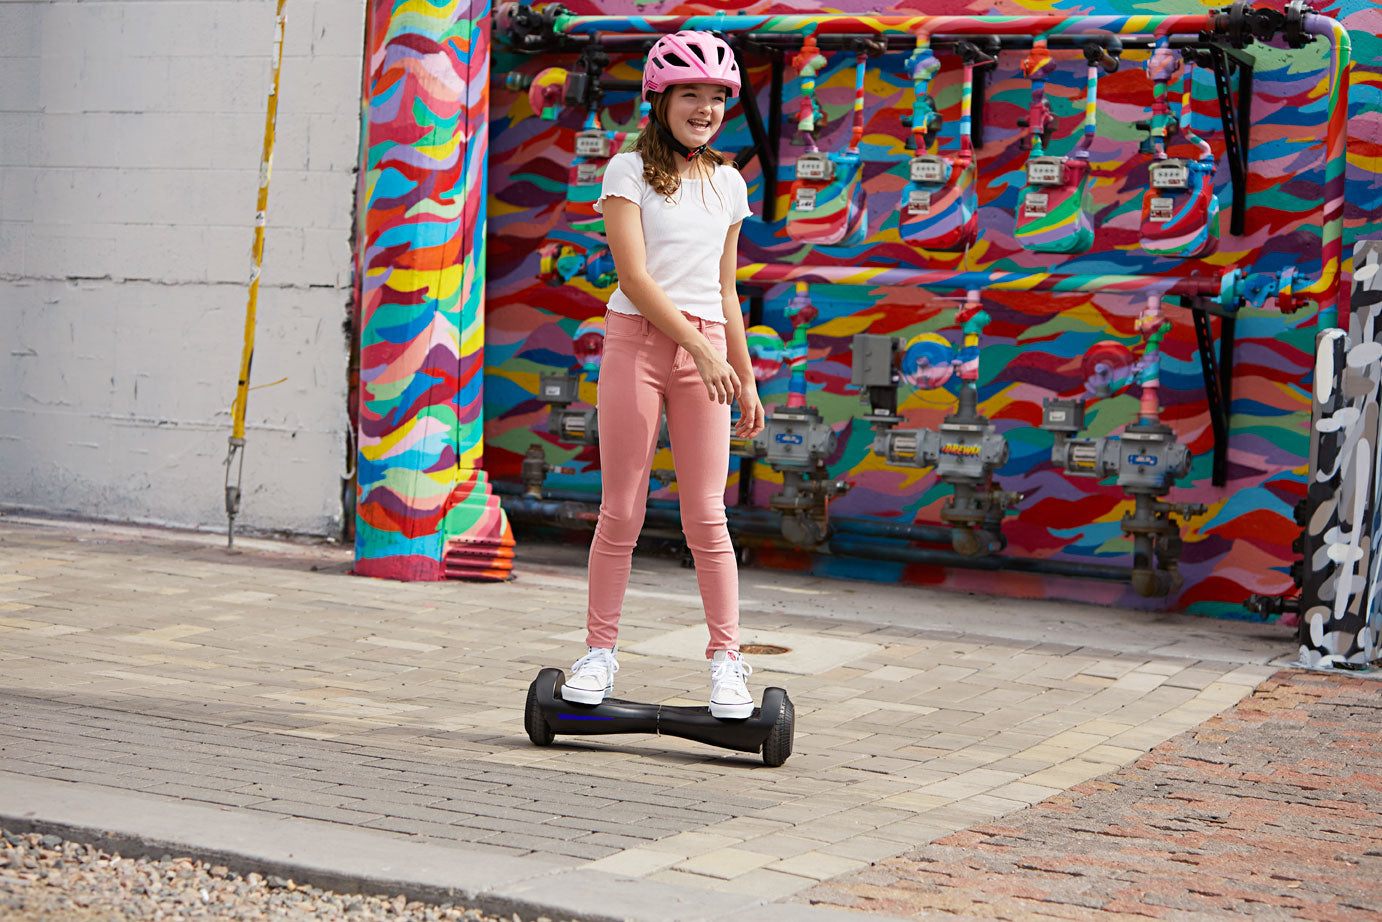 Child riding Black Fluxx FX3 Hoverboard for Kids with LEDs